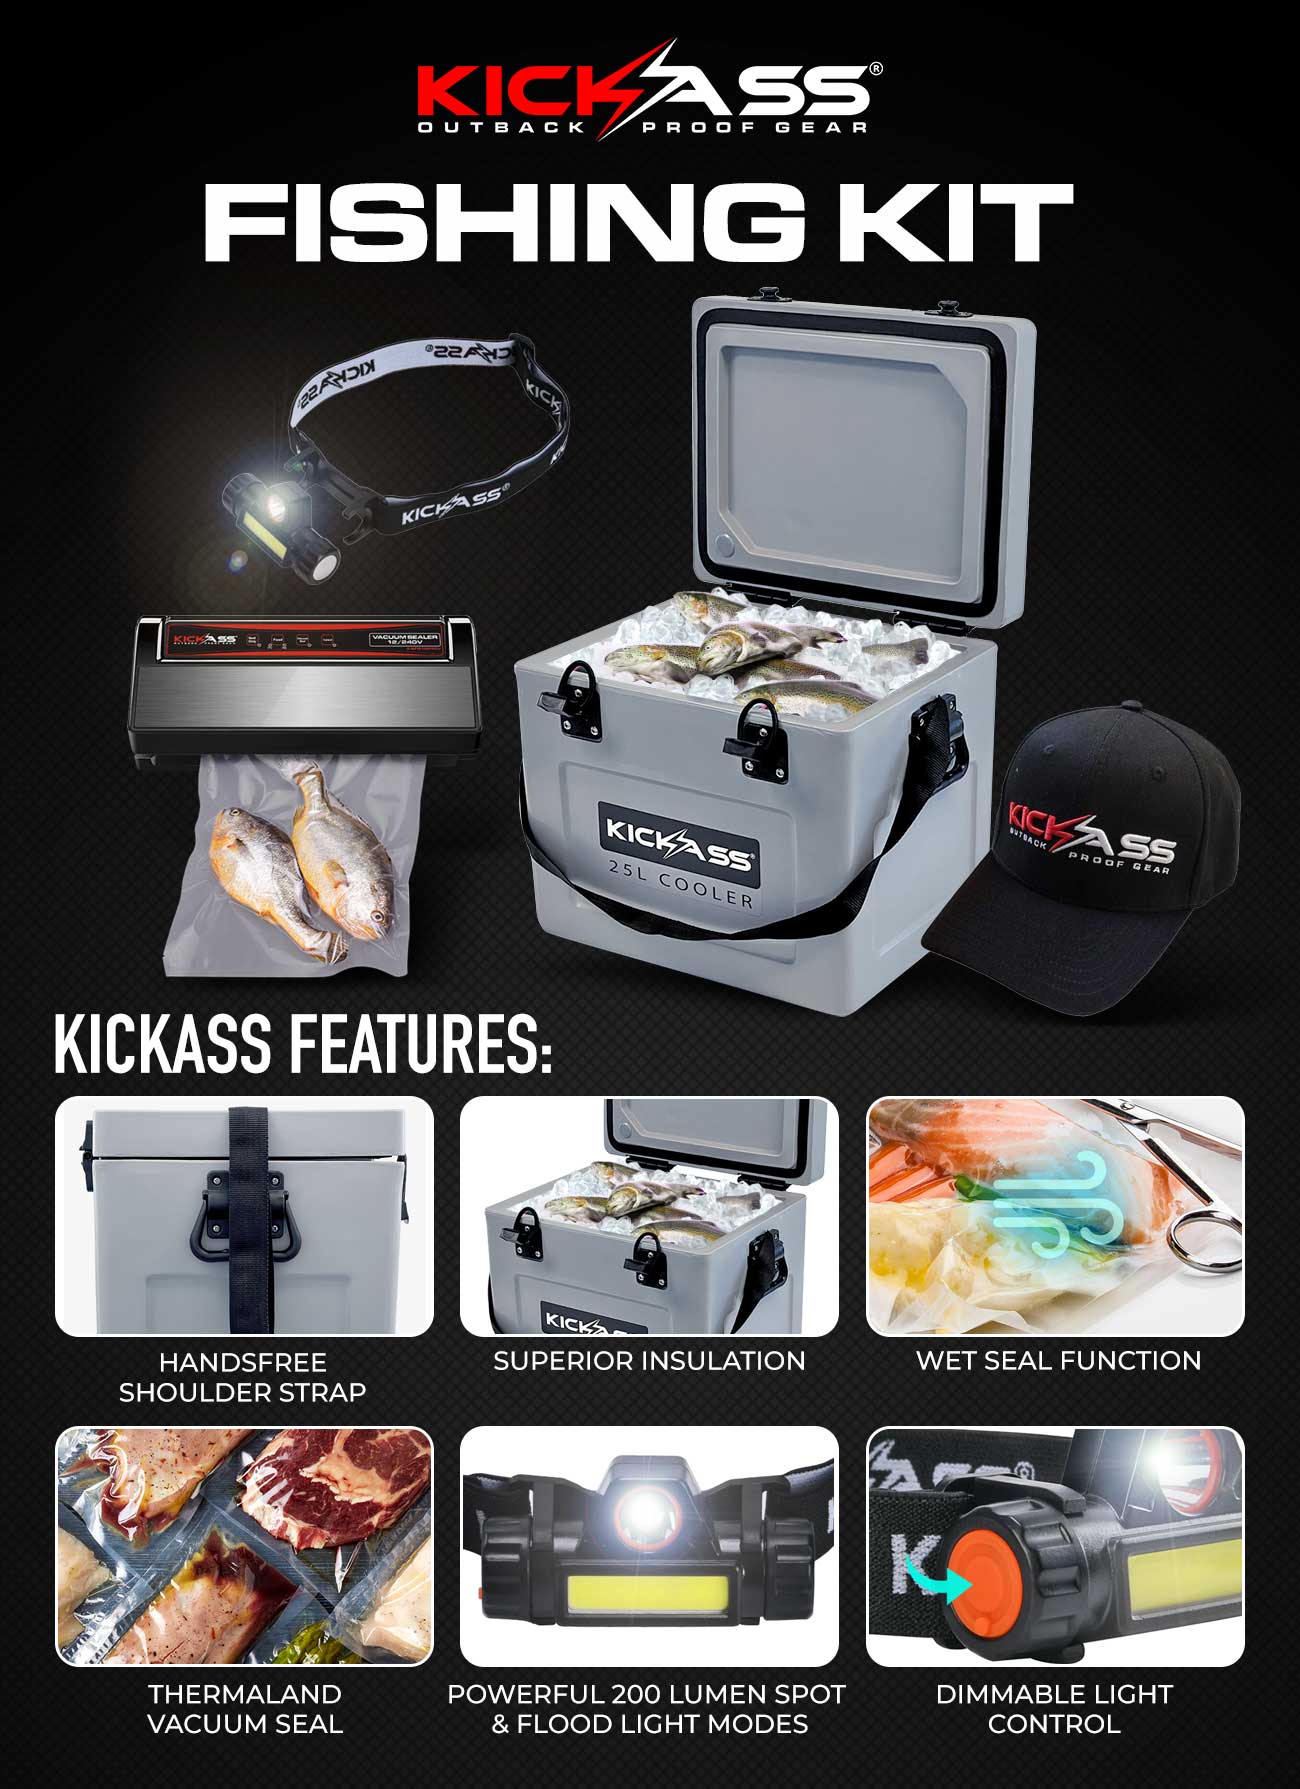 KickAss Fishing Kit! Including a 25L Cooler, Head torch, Vacuum Sealer & Hat.